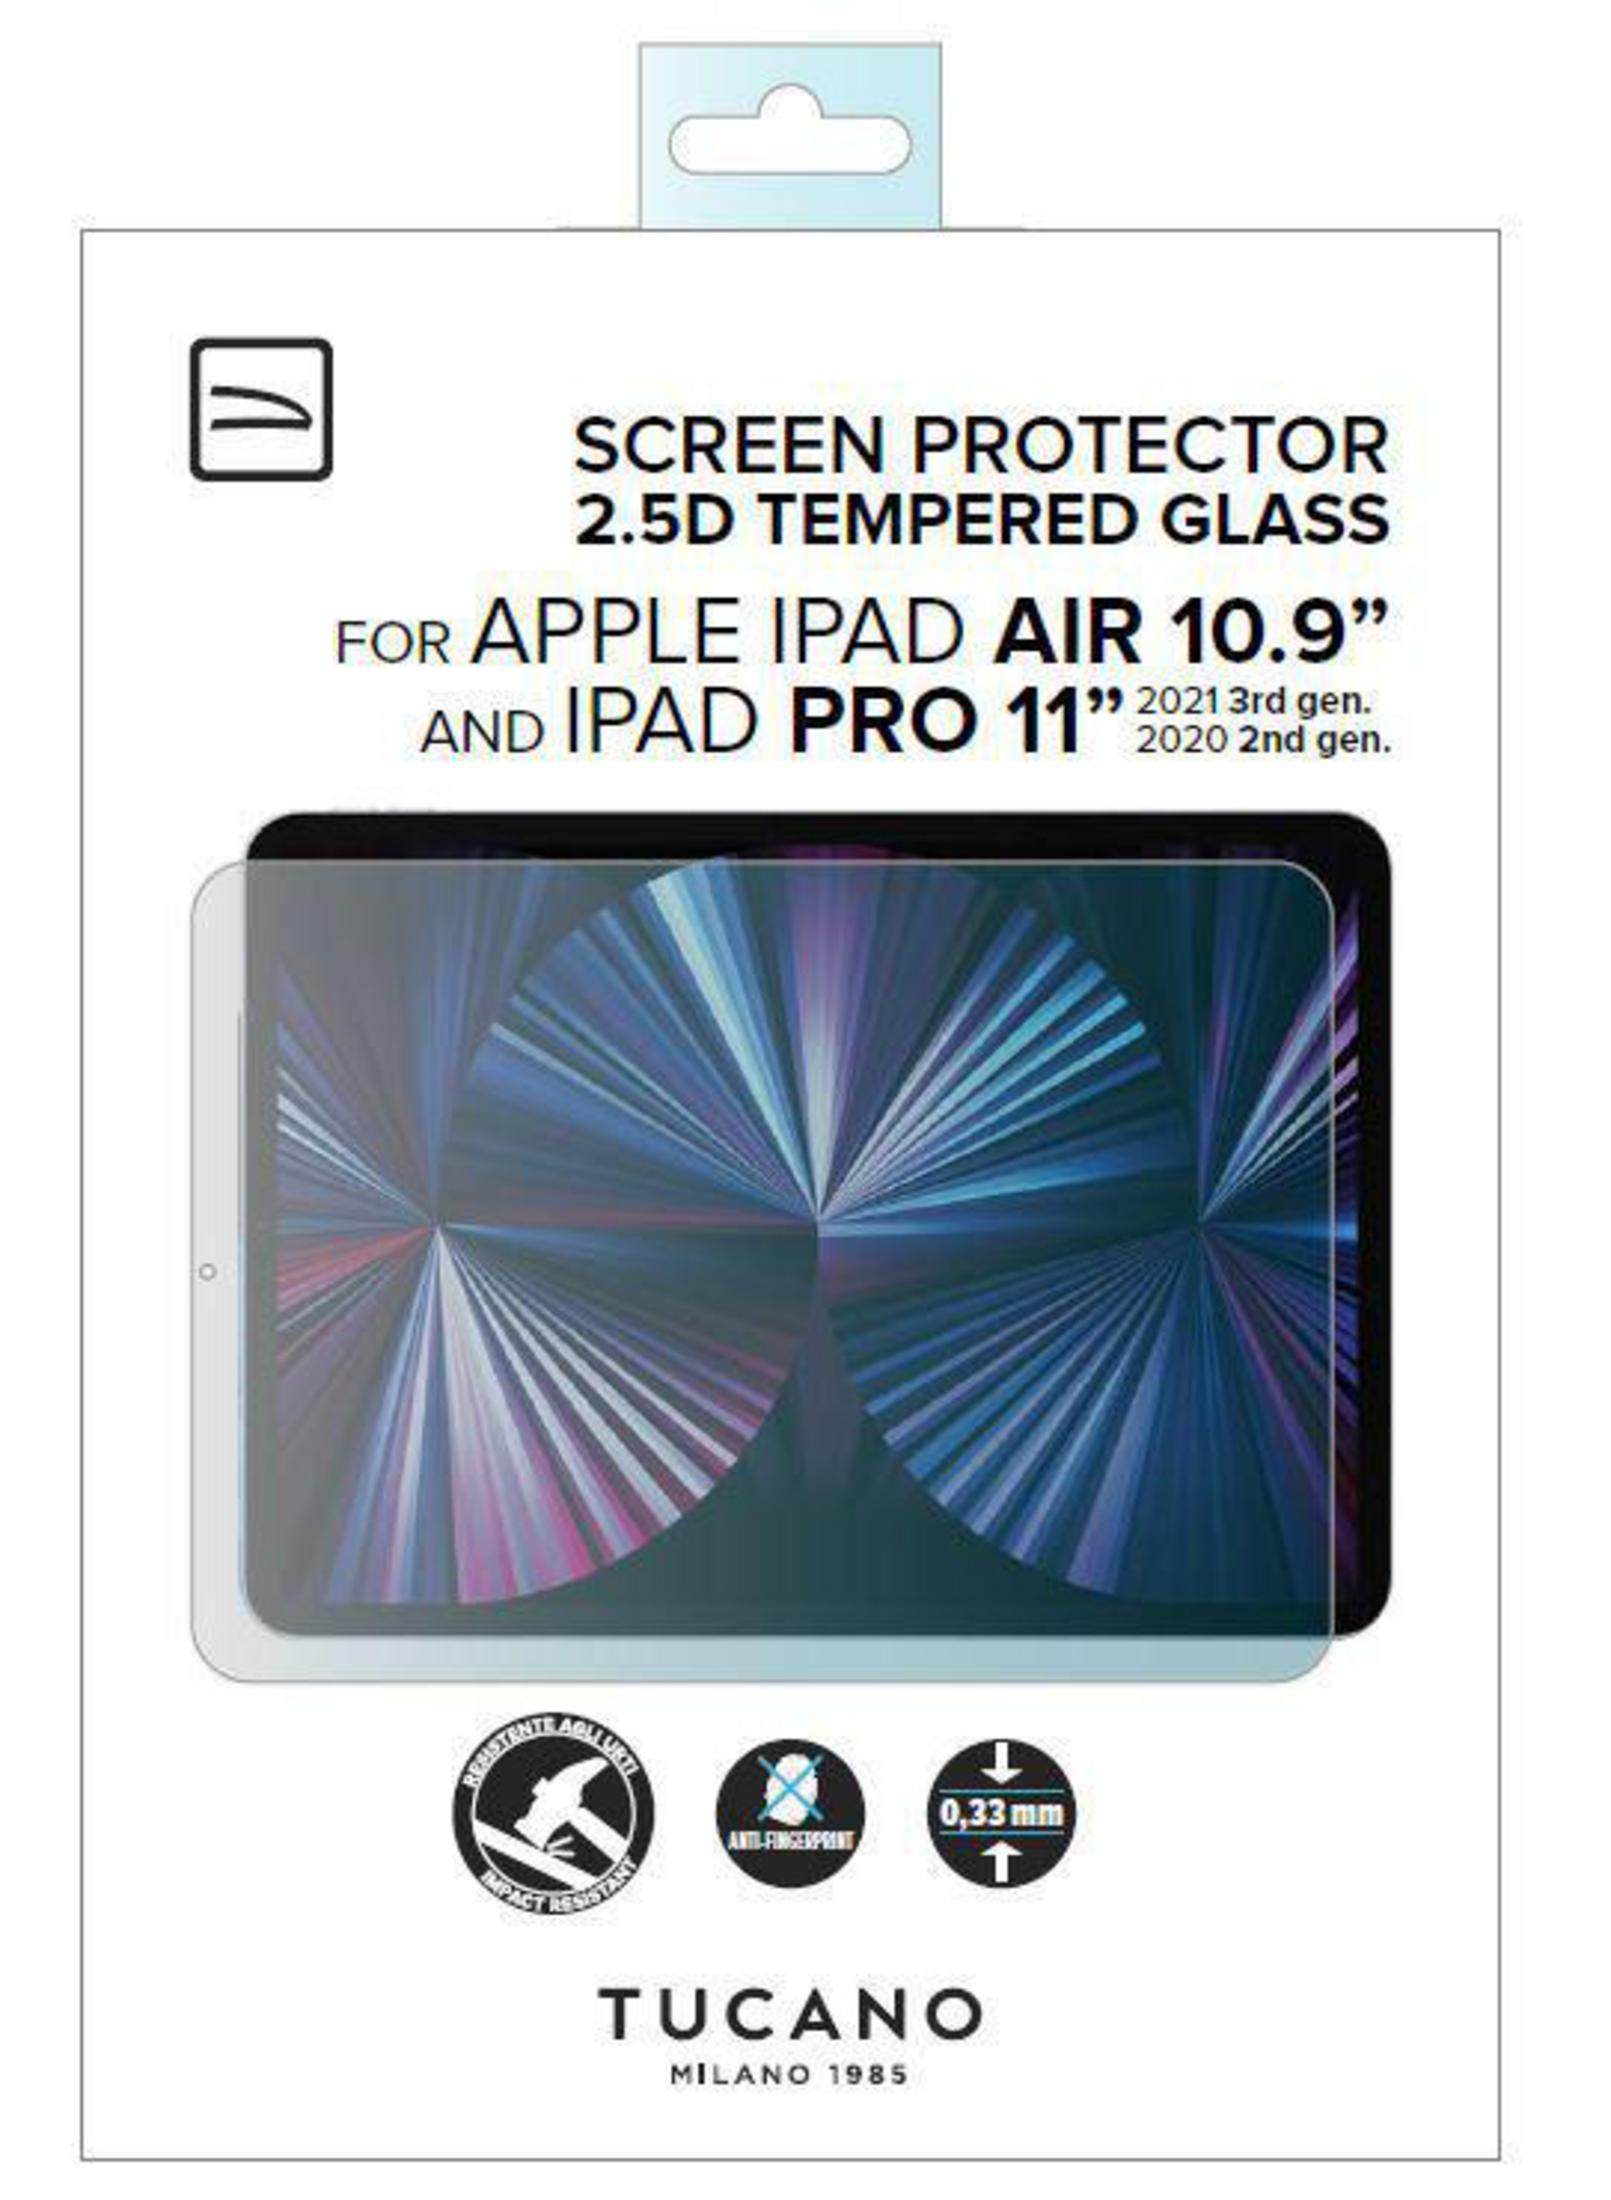 TUCANO IPD109-SP-TG TRANSP. Air 2020)) GLASIPAD 10,9 iPad iPad 5/4 GEN Apple 11\